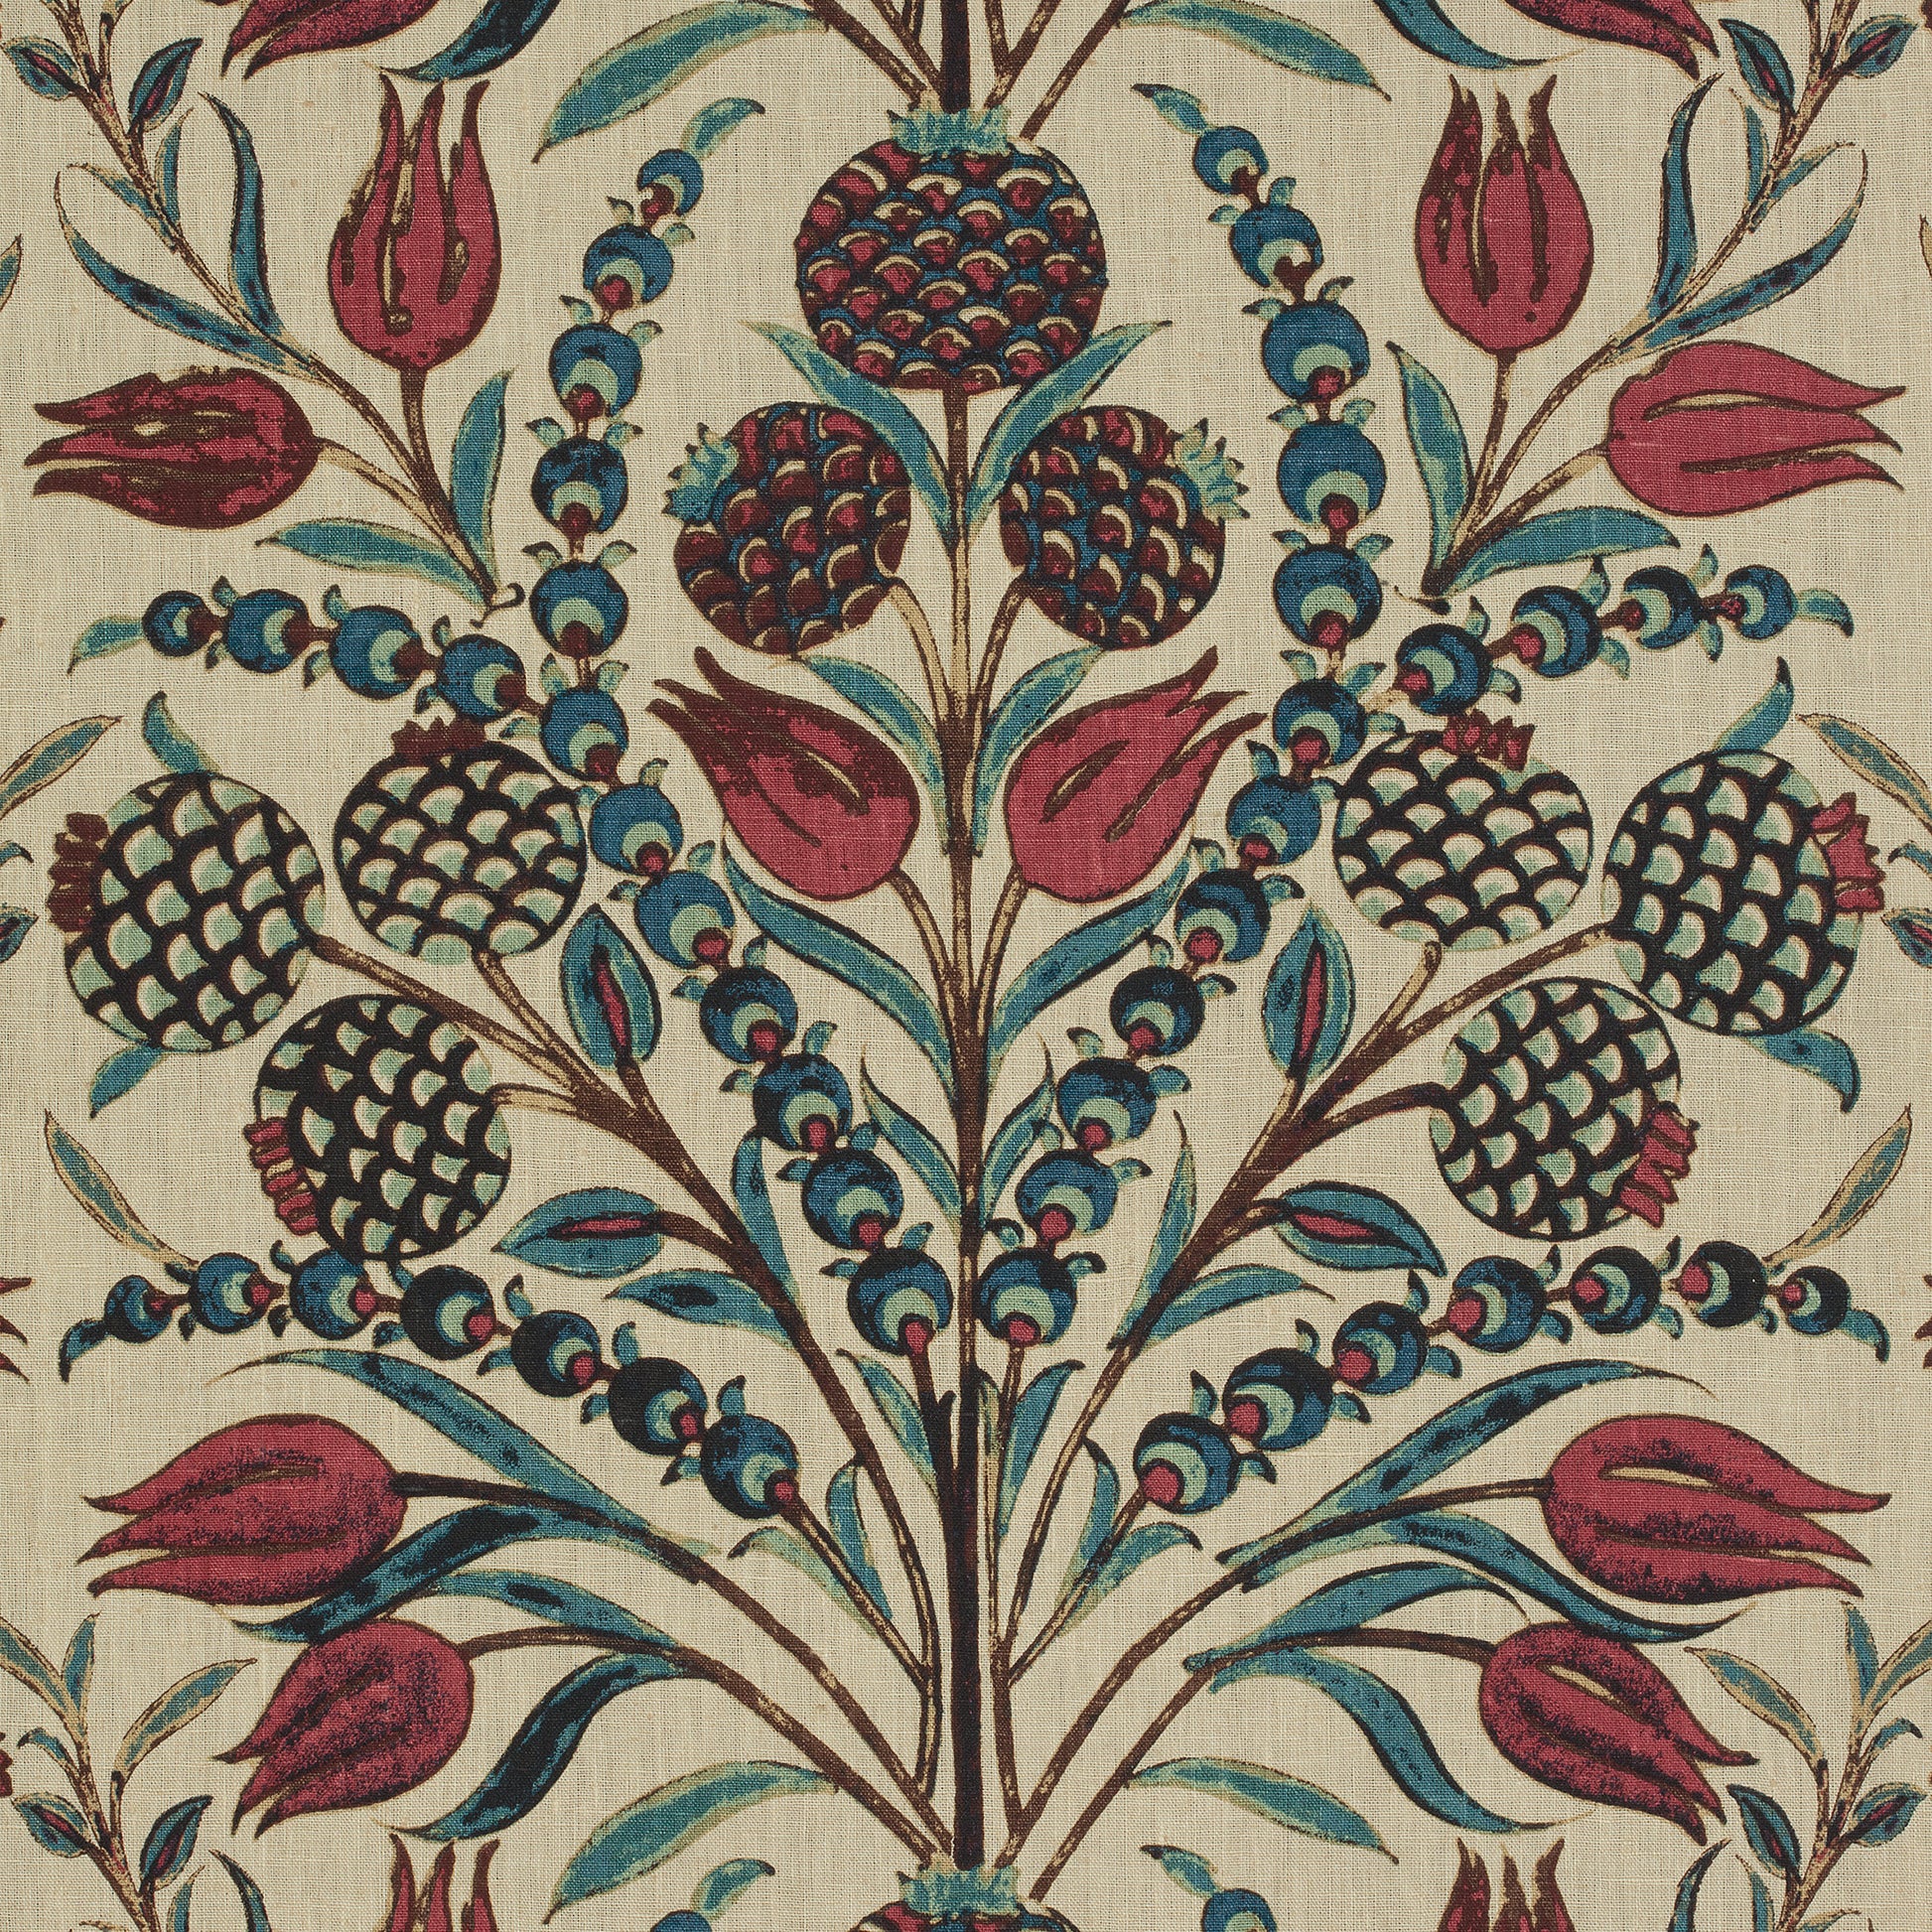 Buy samples of F972601 Corneila Printed Chestnut Hill Thibaut Fabrics